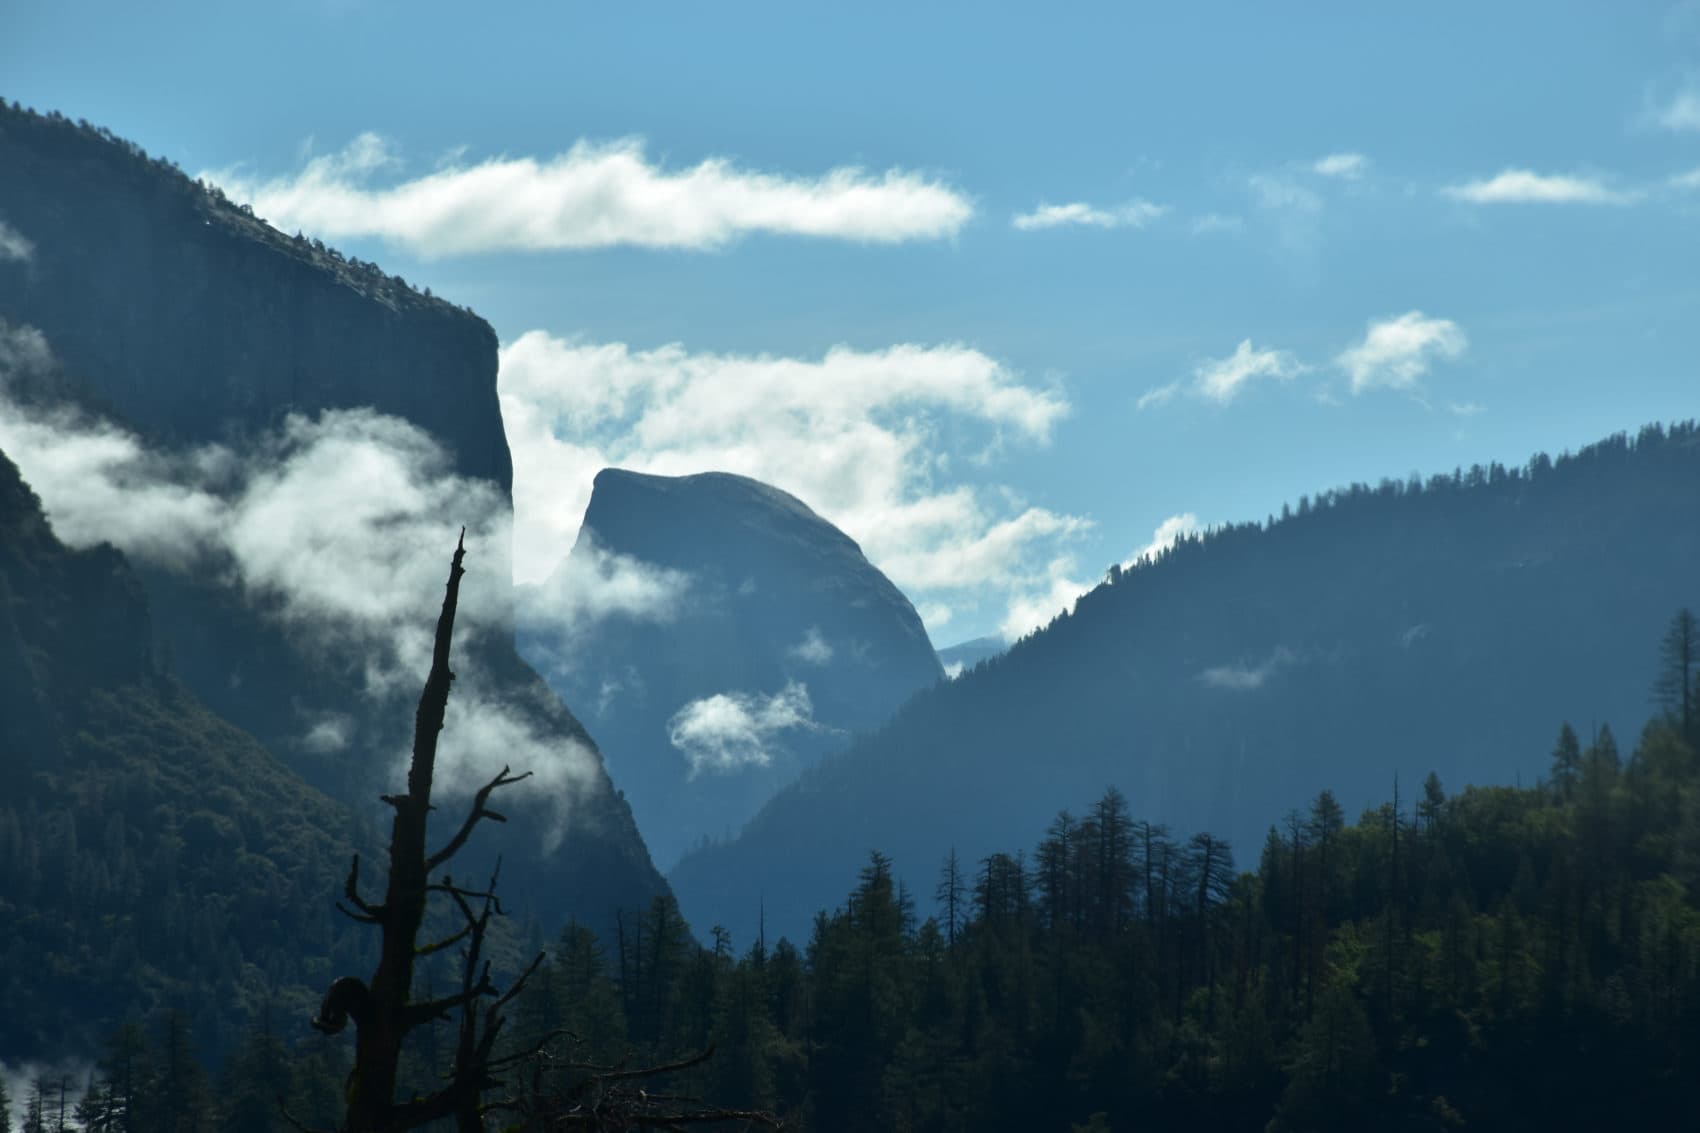 El Capitan (left) and Half Dome (center) define the Yosemite landscape. (Susan Valot for WBUR)